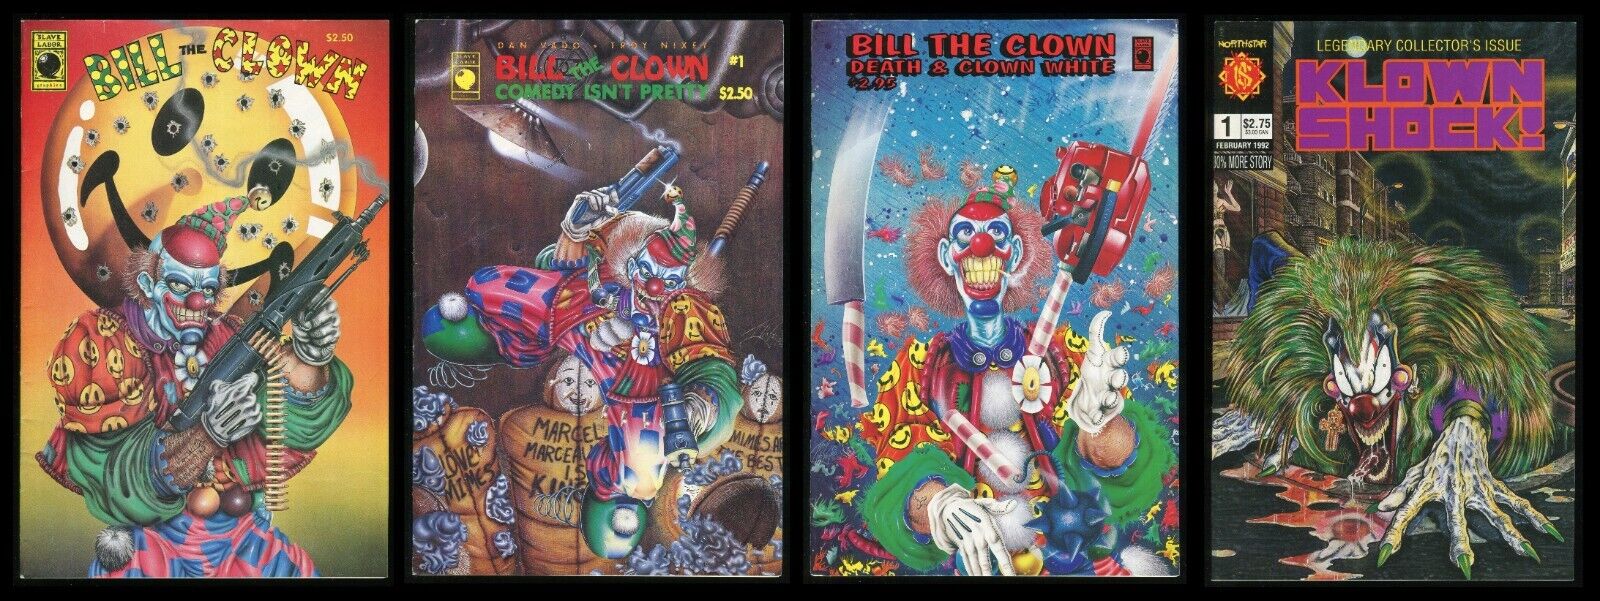 Bill the Clown 1 Comedy Isn\'t Pretty Death & Clown White + Klownshock Comic Lot